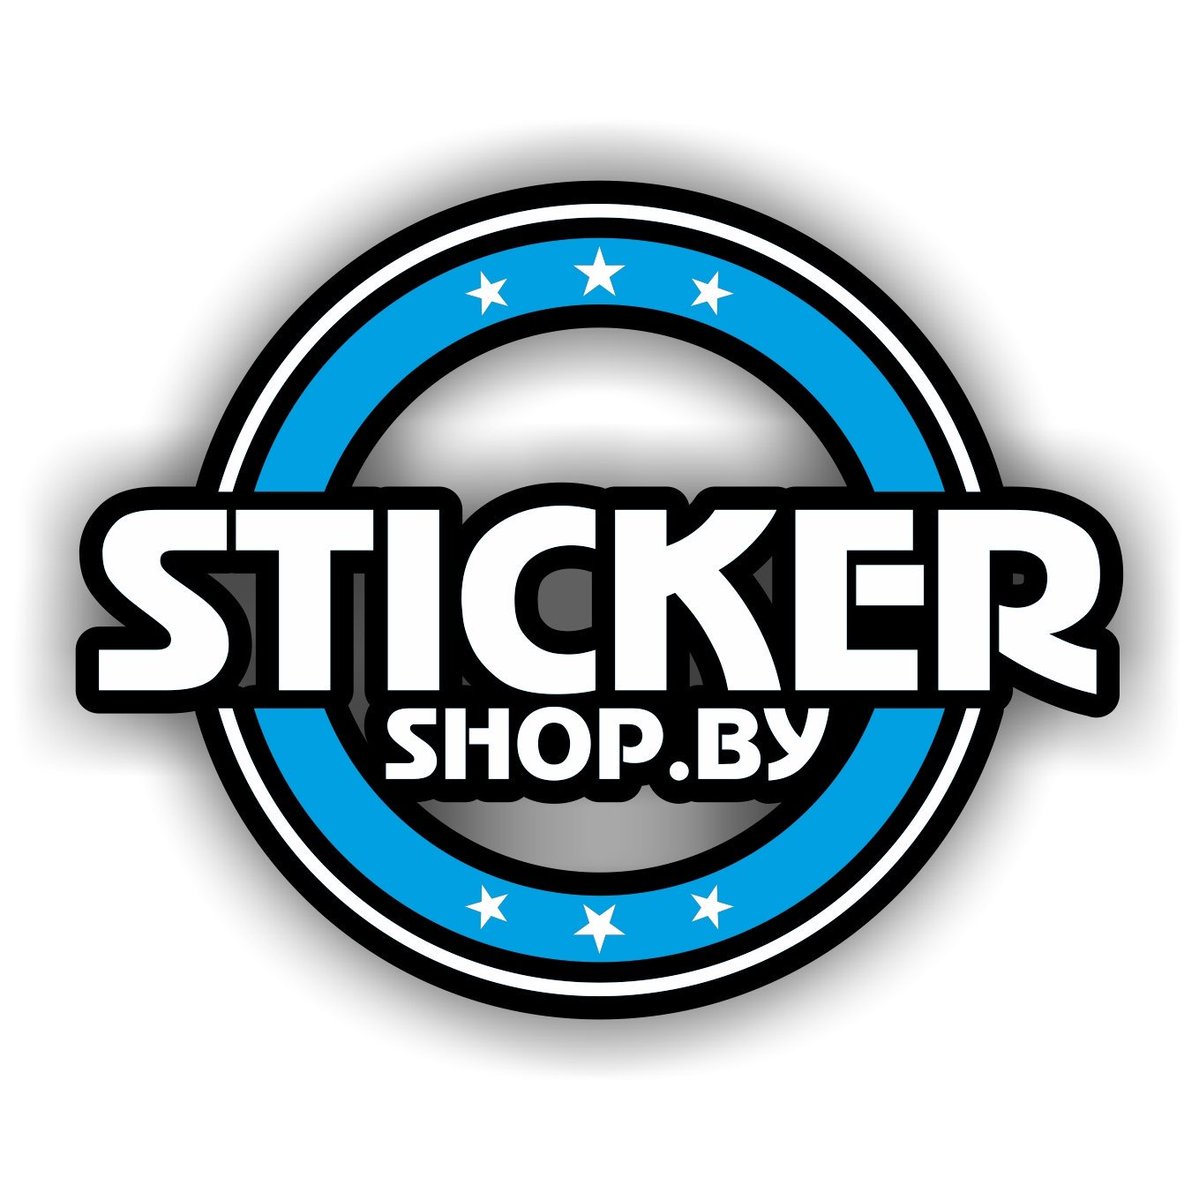 Sticker shoppe